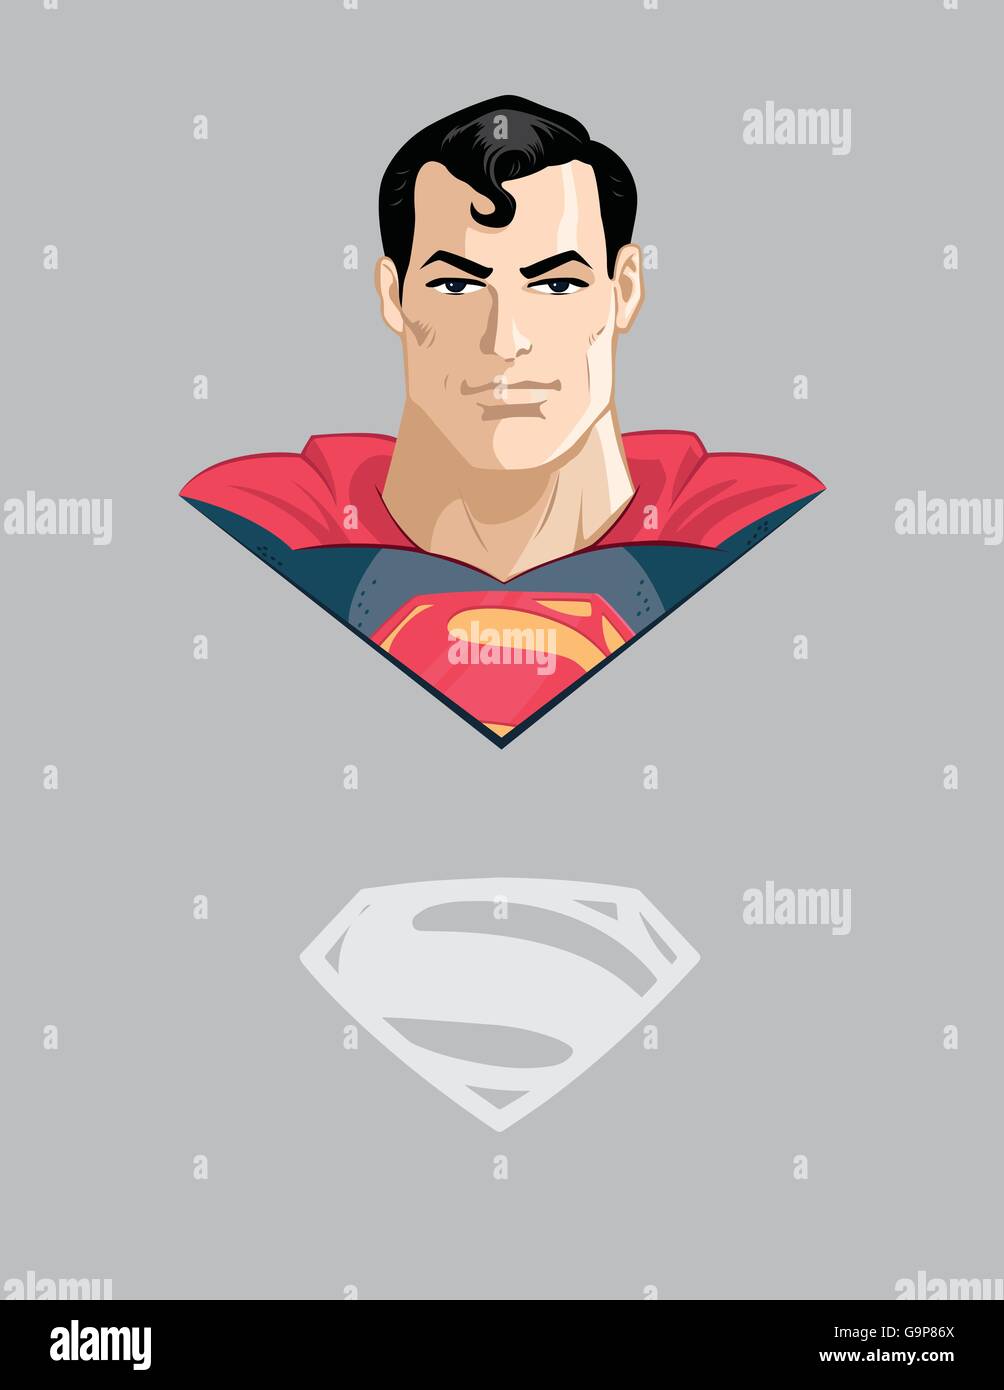 Superhero Avatars by hopstarter on DeviantArt